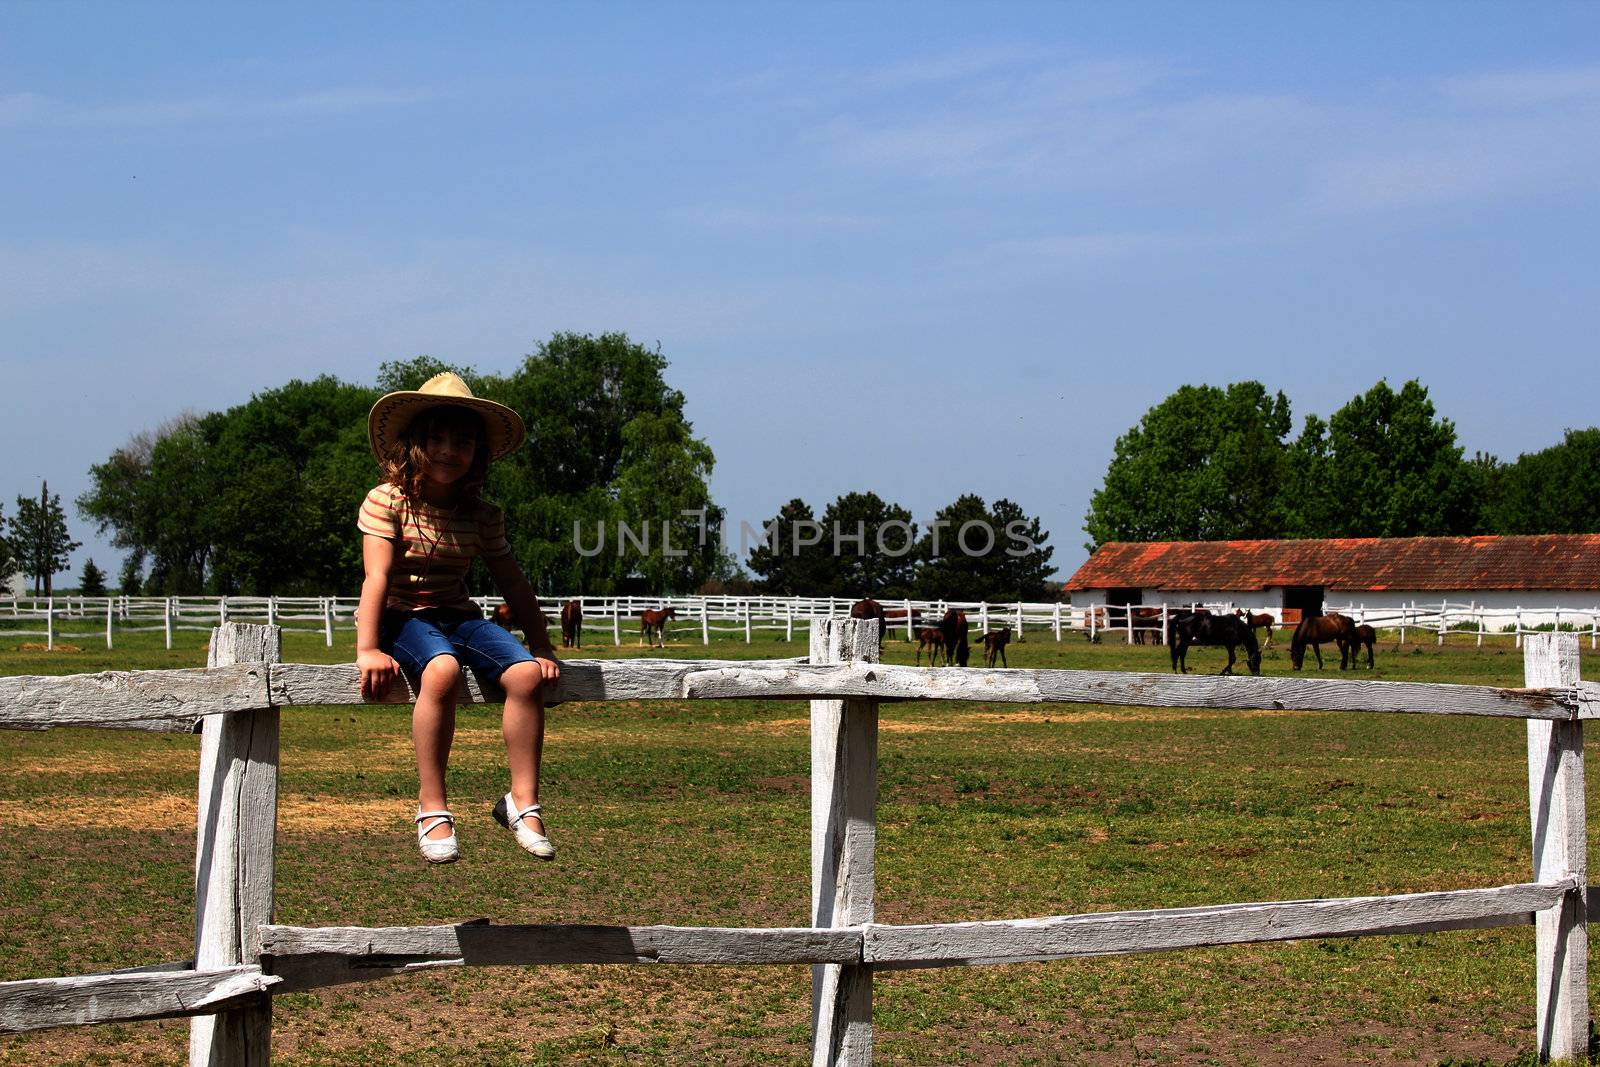 little girl sitting on corral fence farm scene